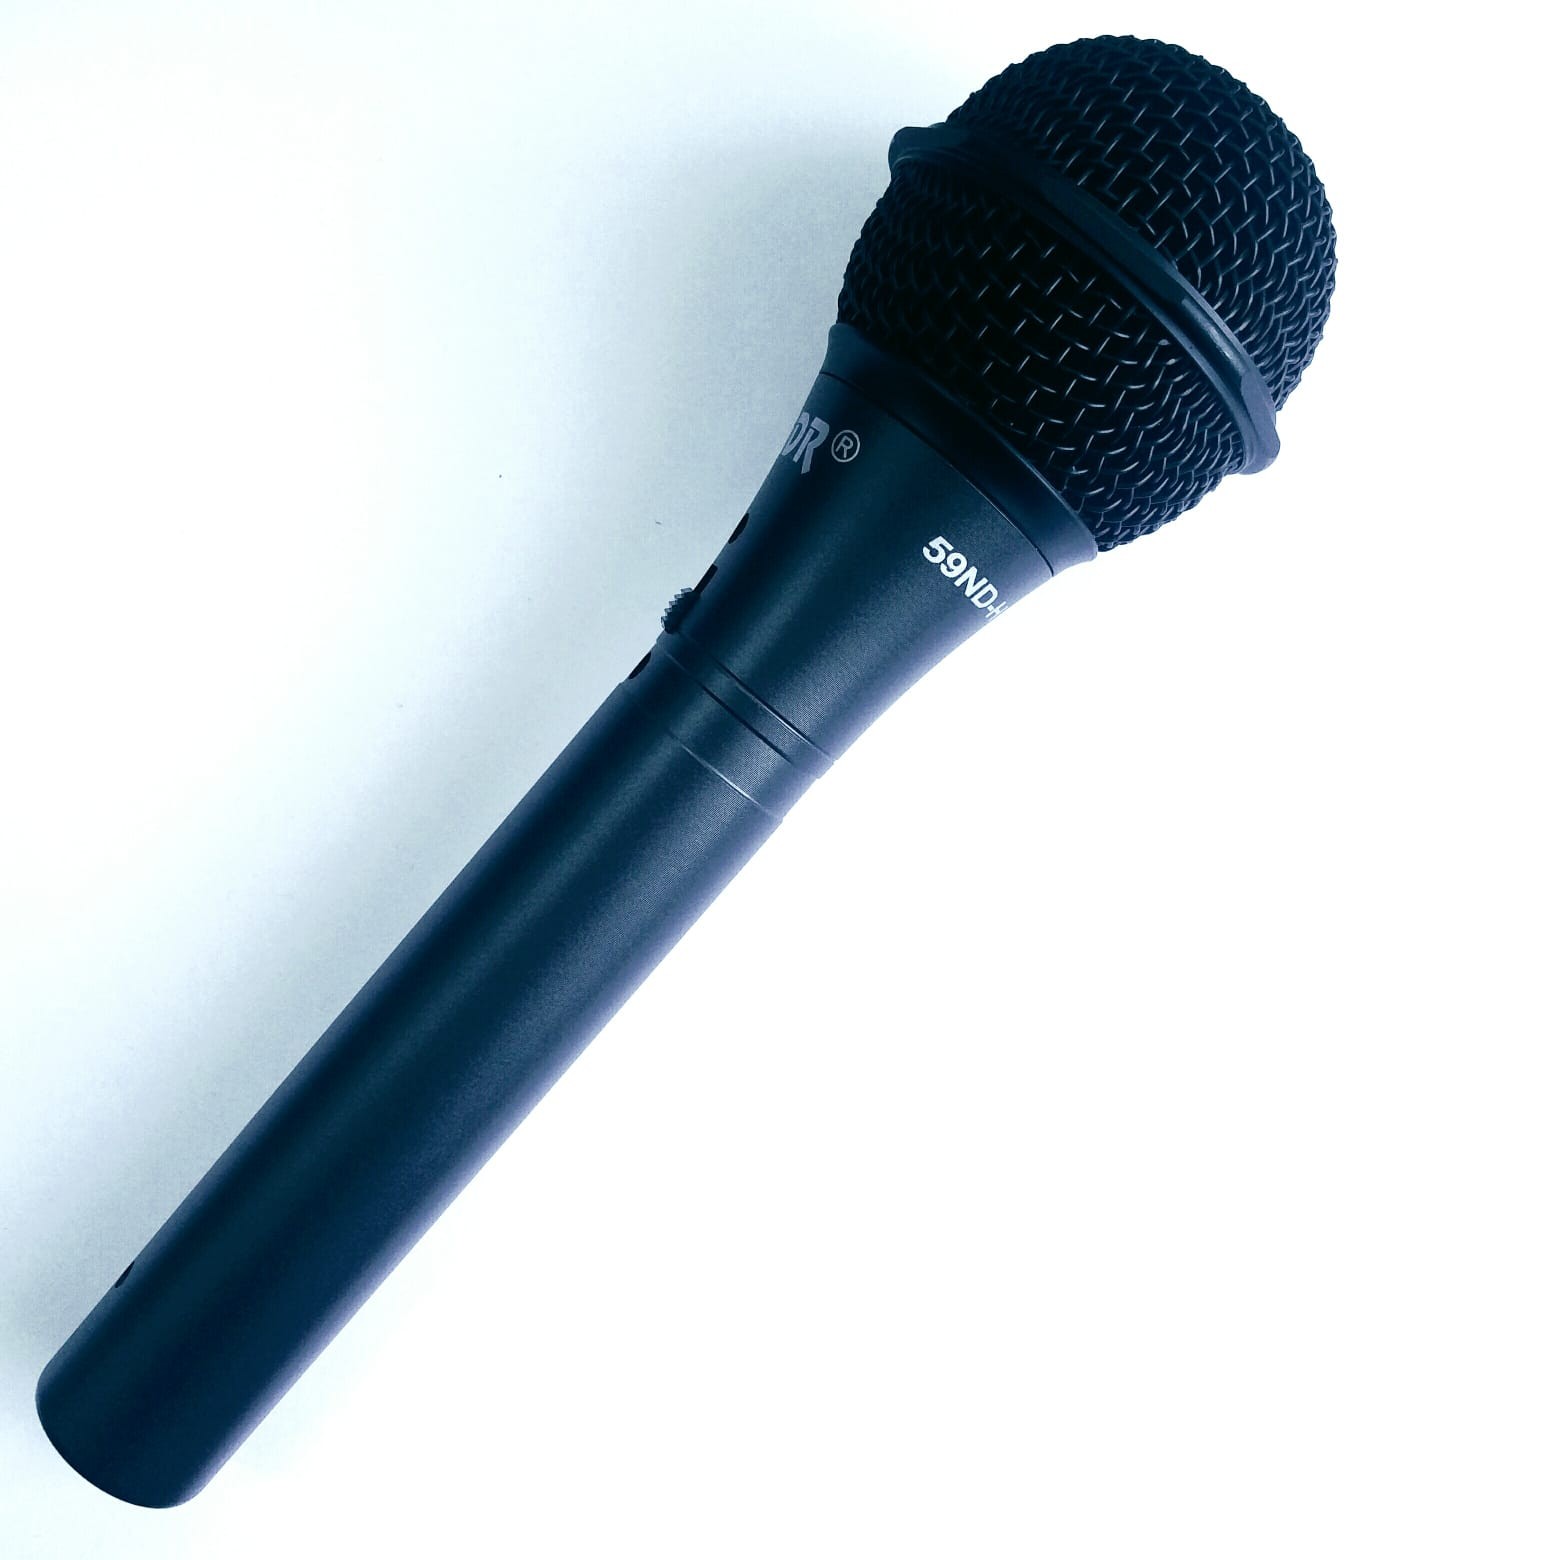 Microfon cu fir SGDR